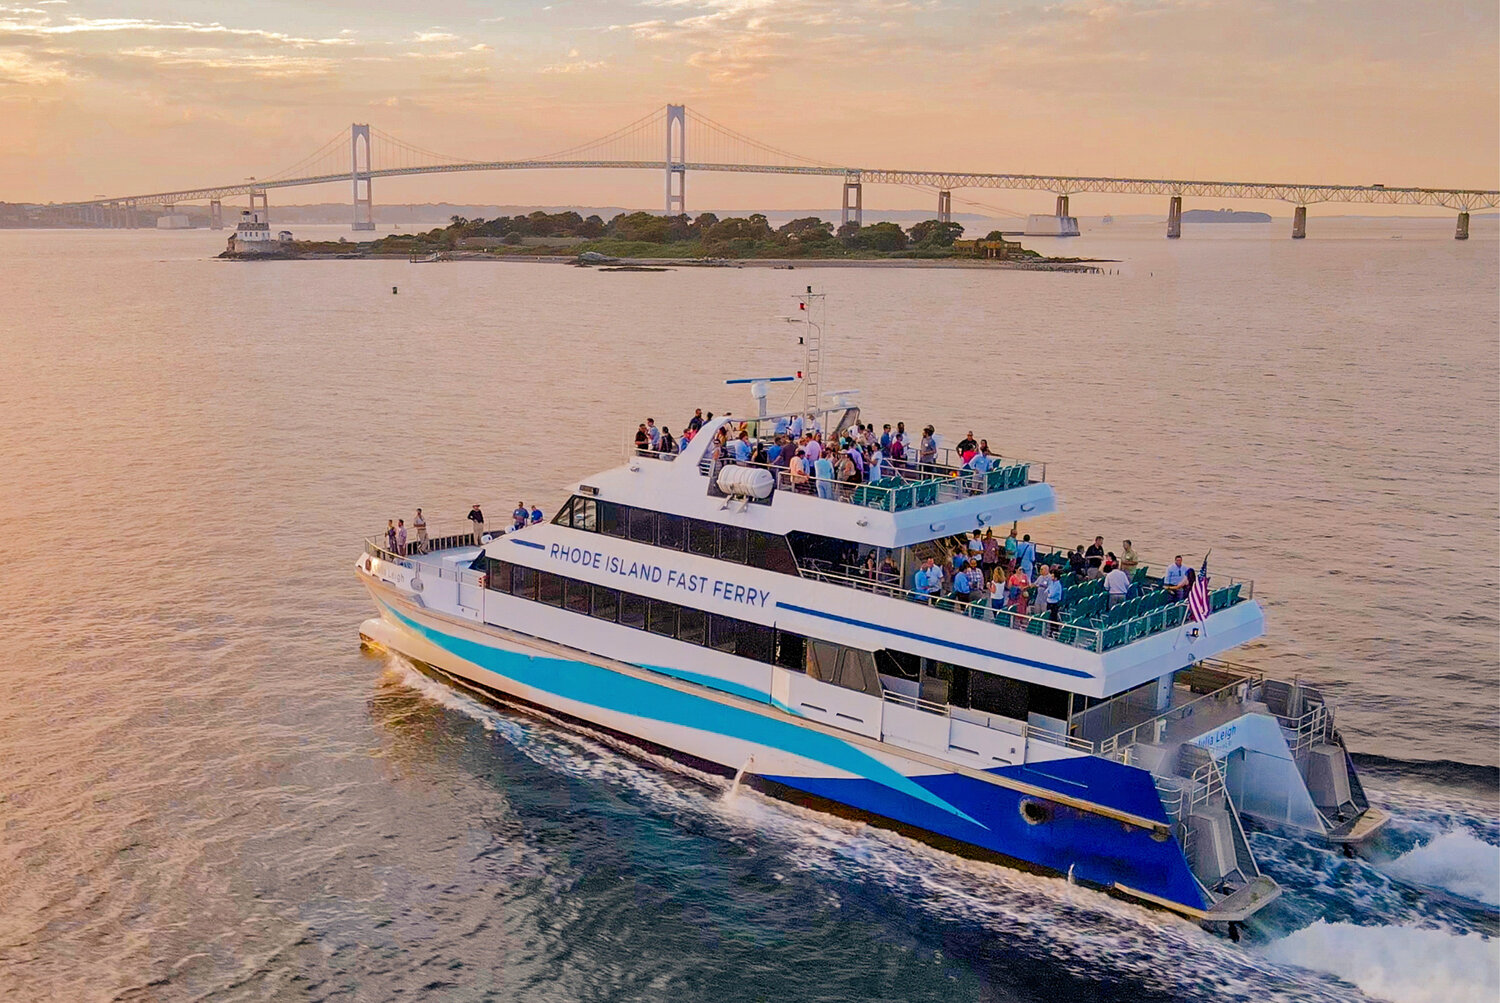 A Rhode Island Fast Ferry sightseeing cruise